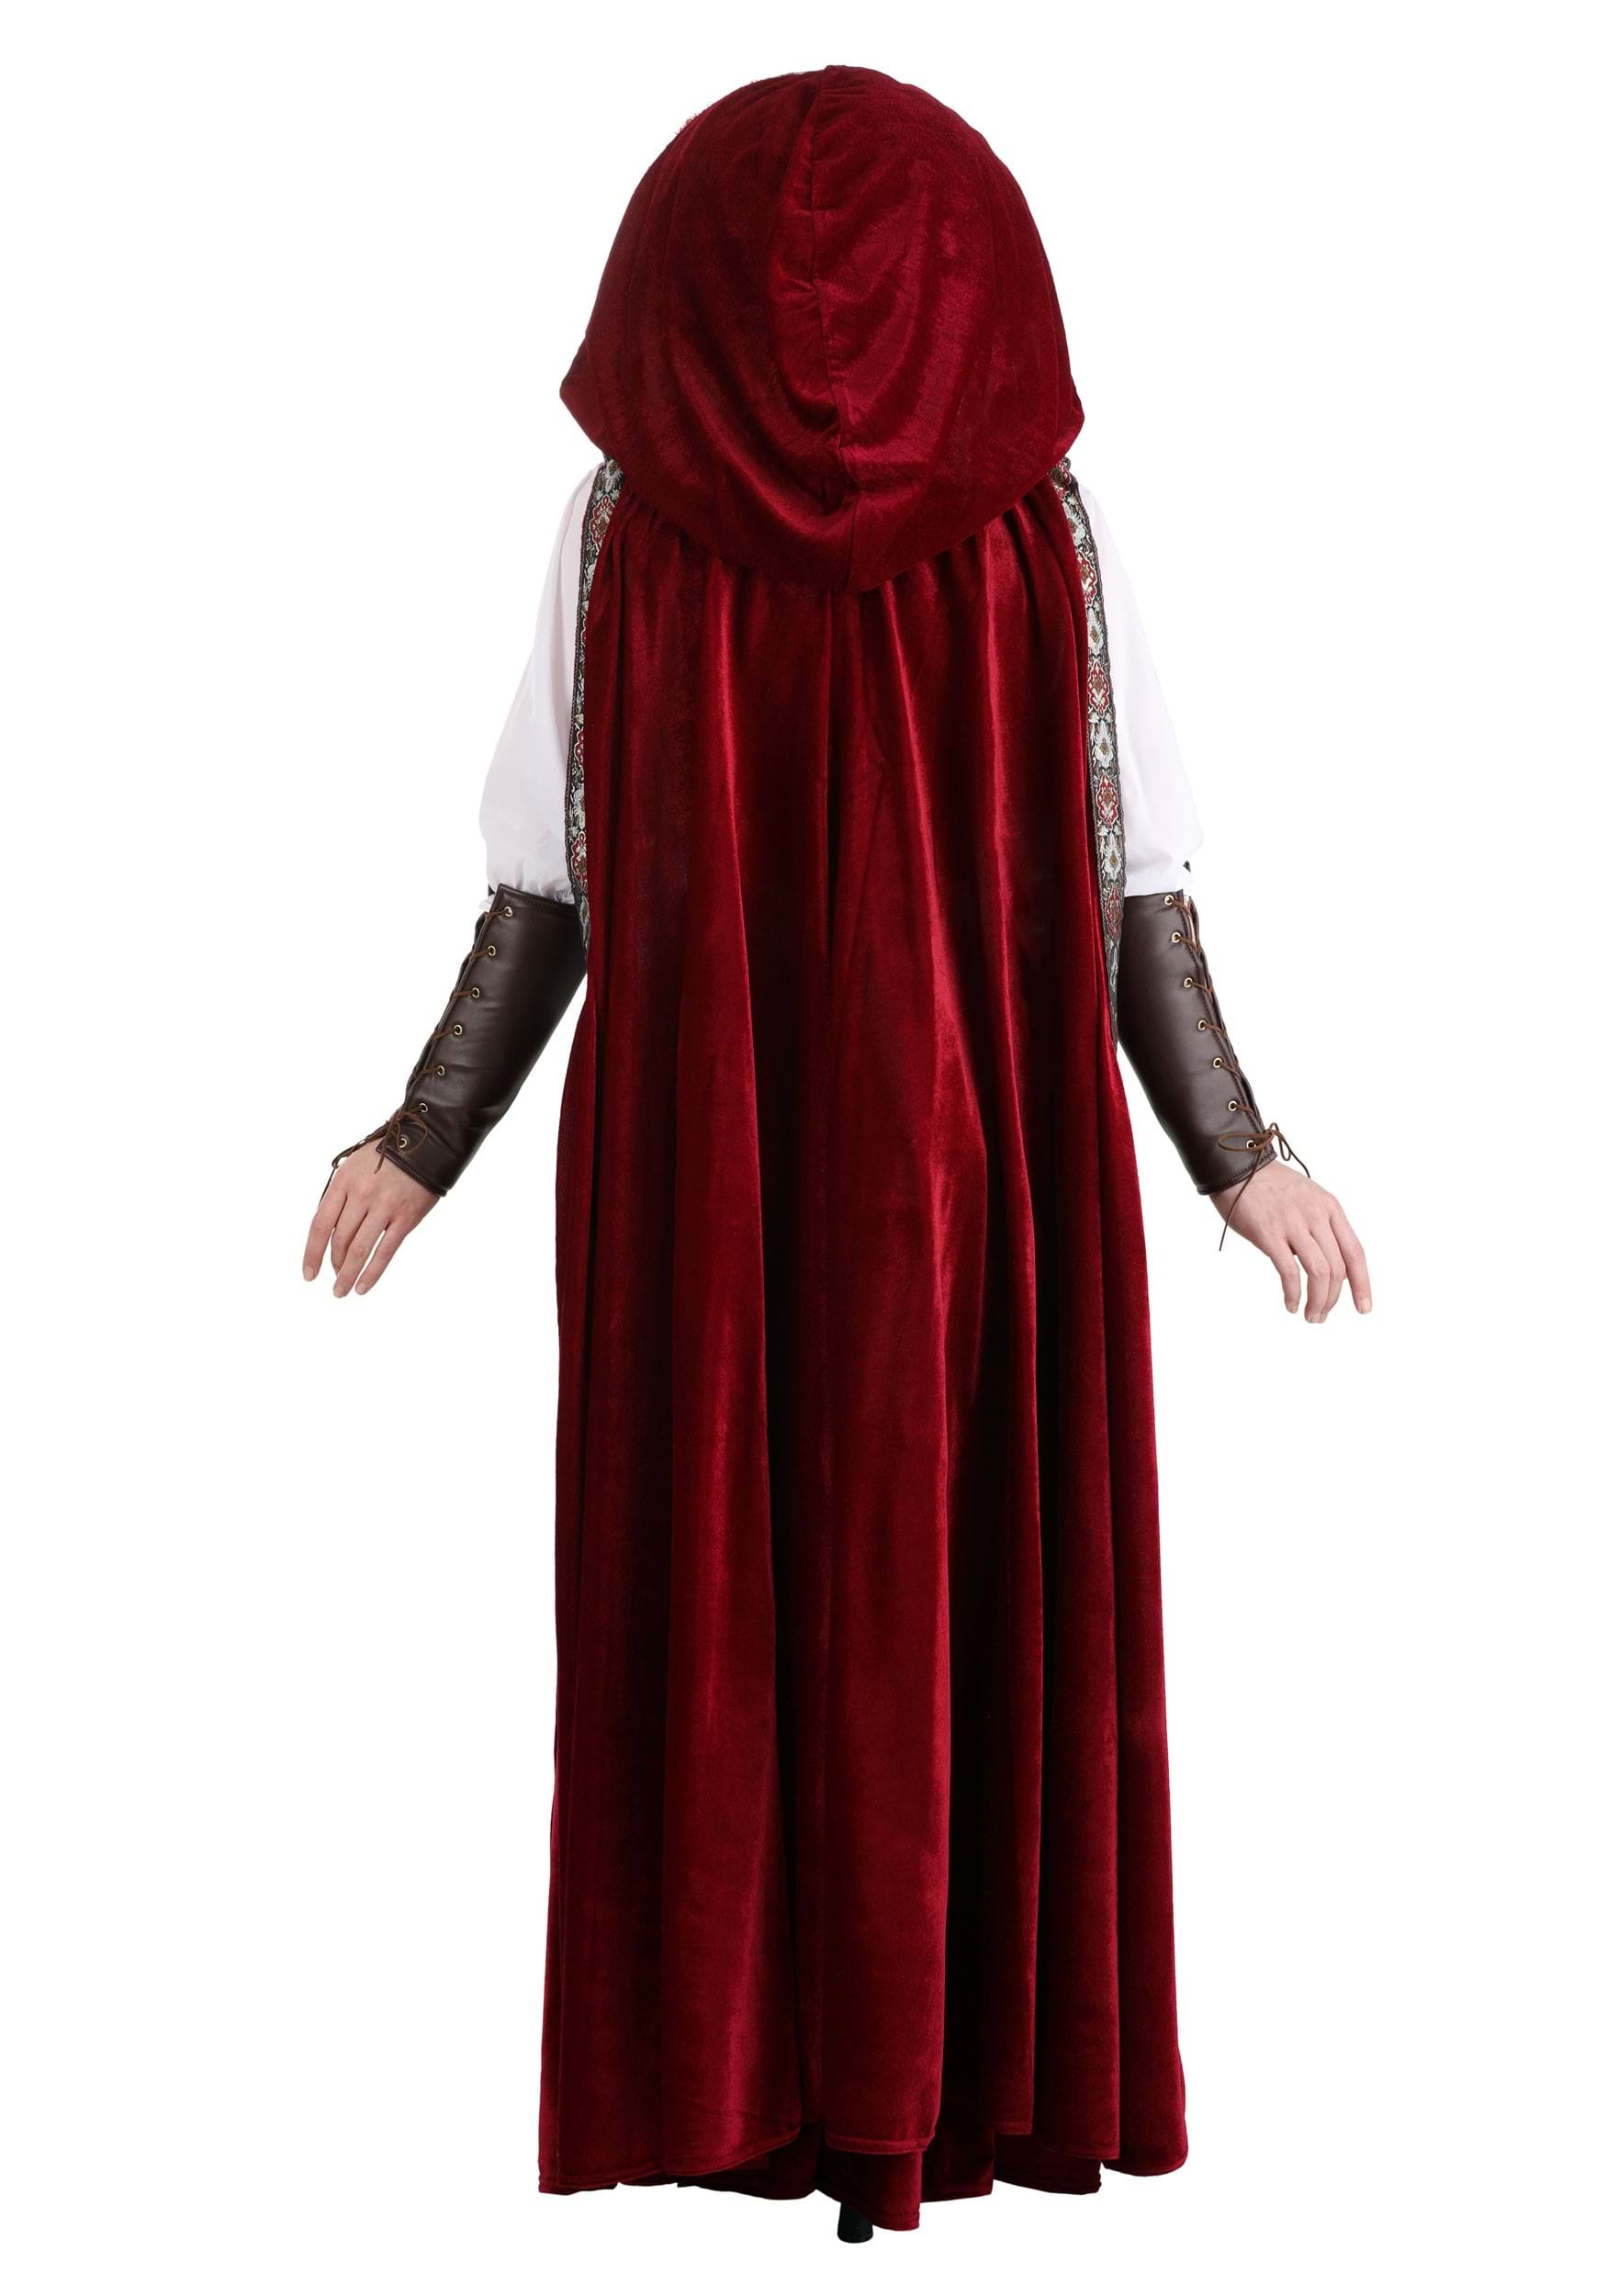 Gothic Riding Hood - Choco Express Disfraces caperucita roja